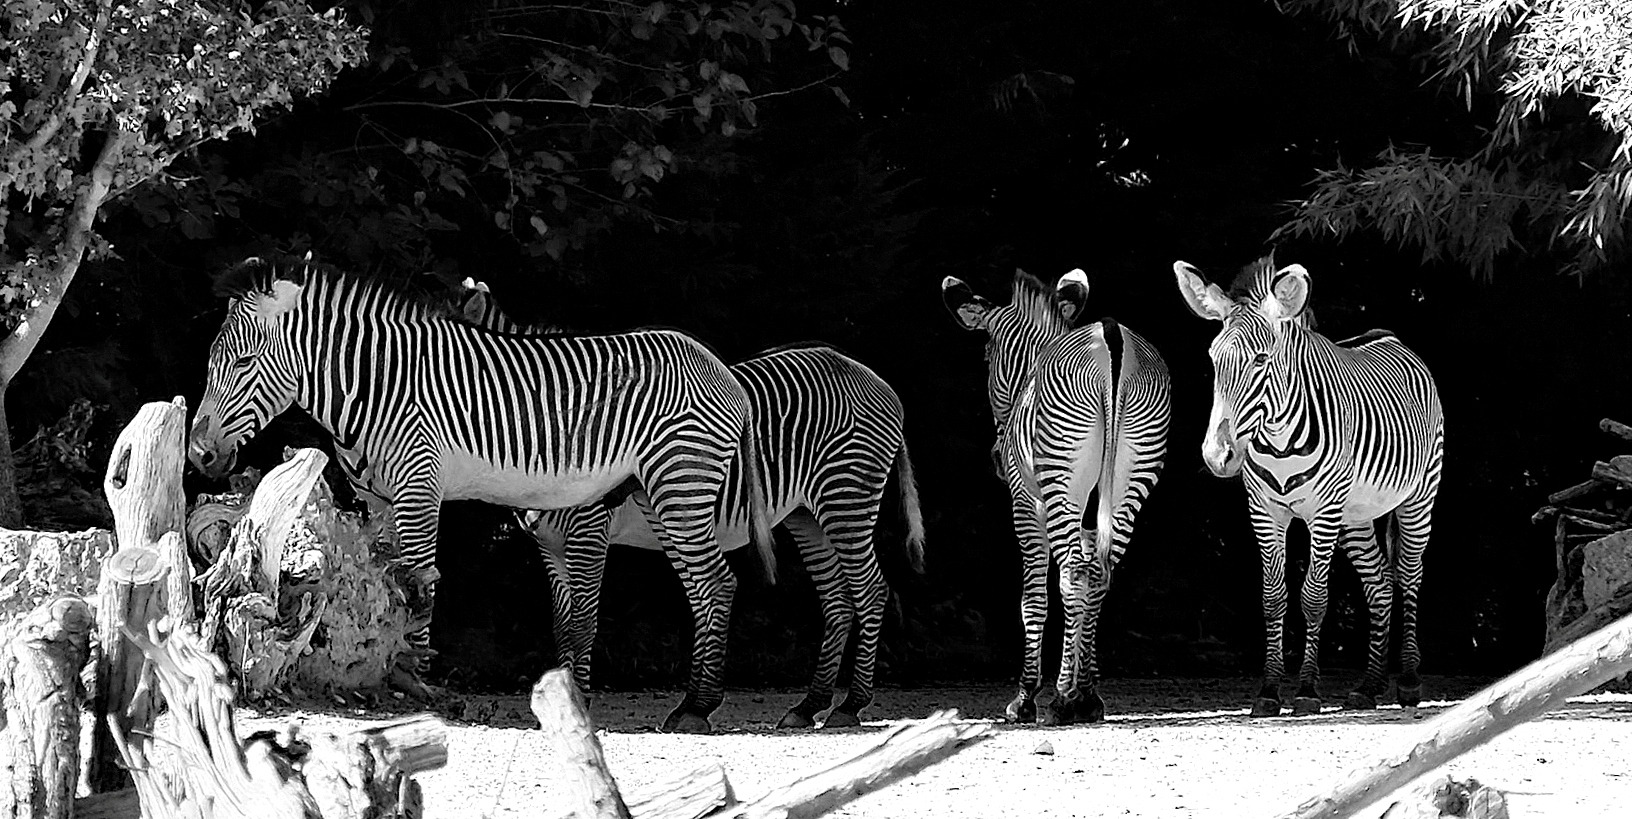 Zebras in B&W...